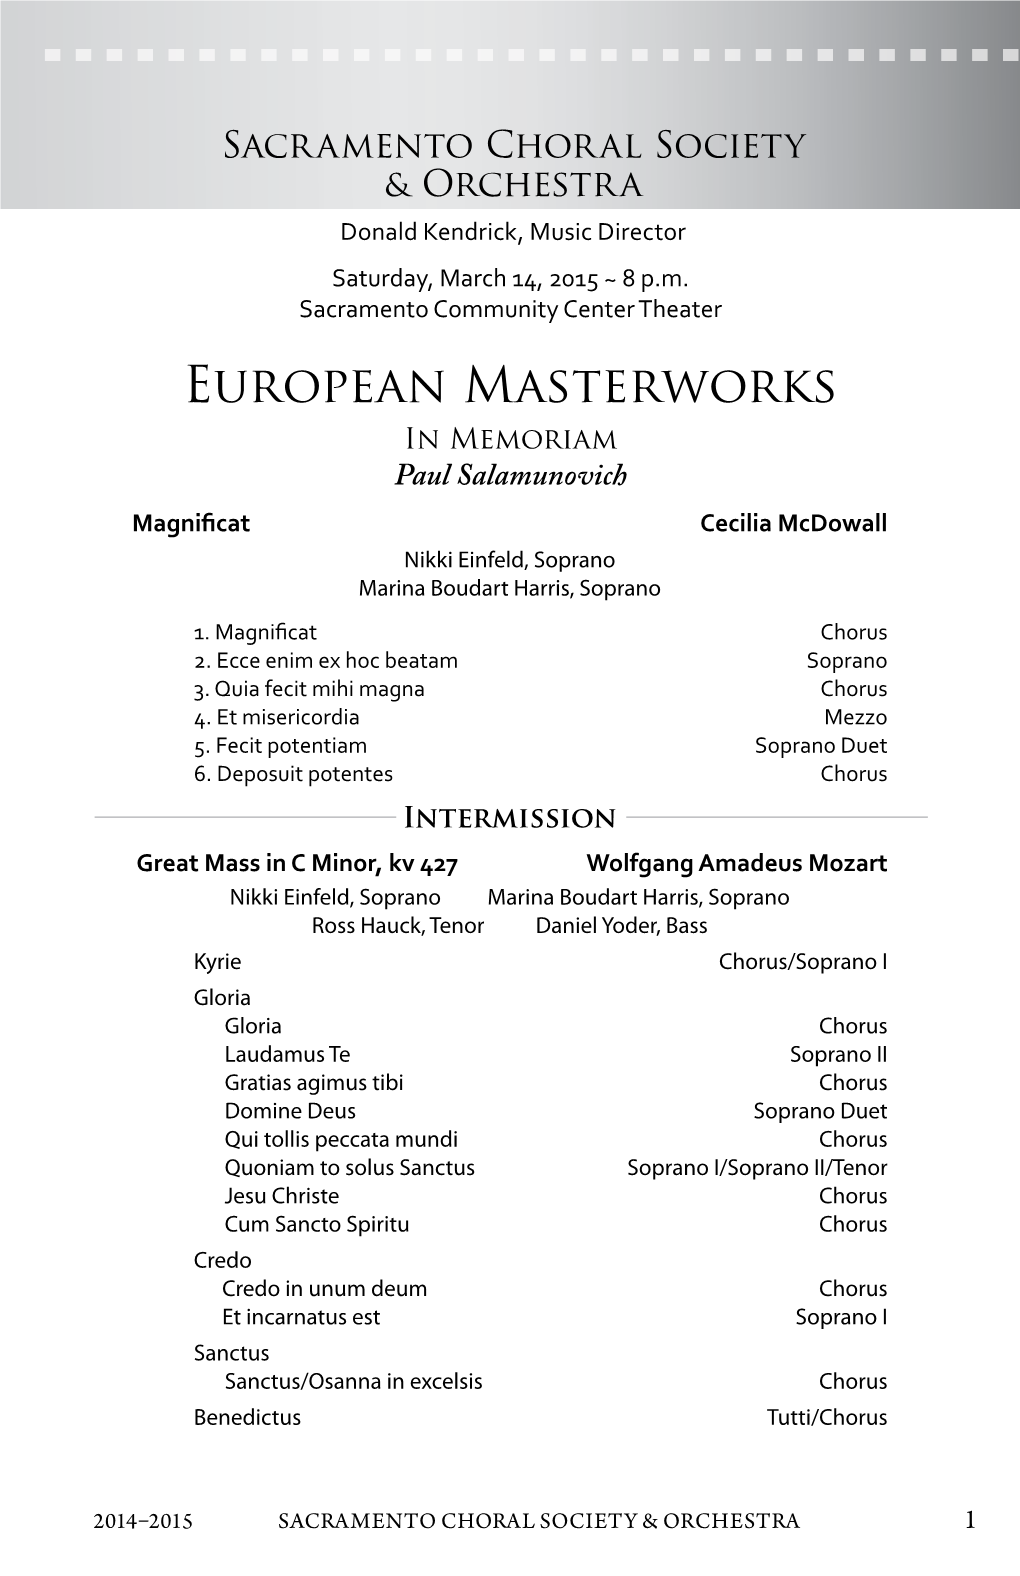 European Masterworks in Memoriam Paul Salamunovich Magnificat Cecilia Mcdowall Nikki Einfeld, Soprano Marina Boudart Harris, Soprano 1